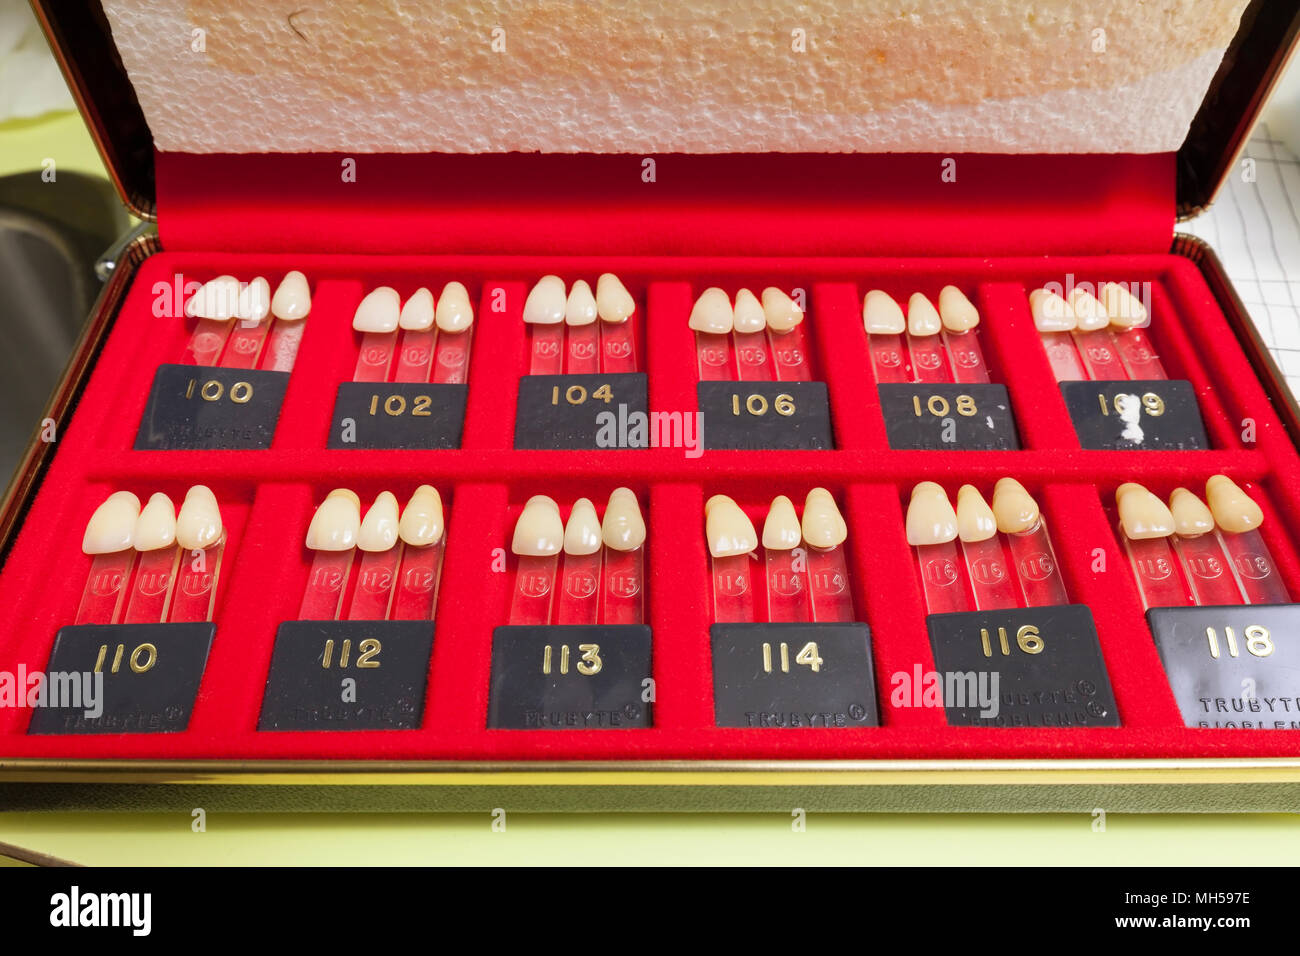 Selector de mezcla un conjunto de dientes falsos fabricados por Trubyte Bioblend para seleccionar un color de dientes falsos del paciente. Foto de stock